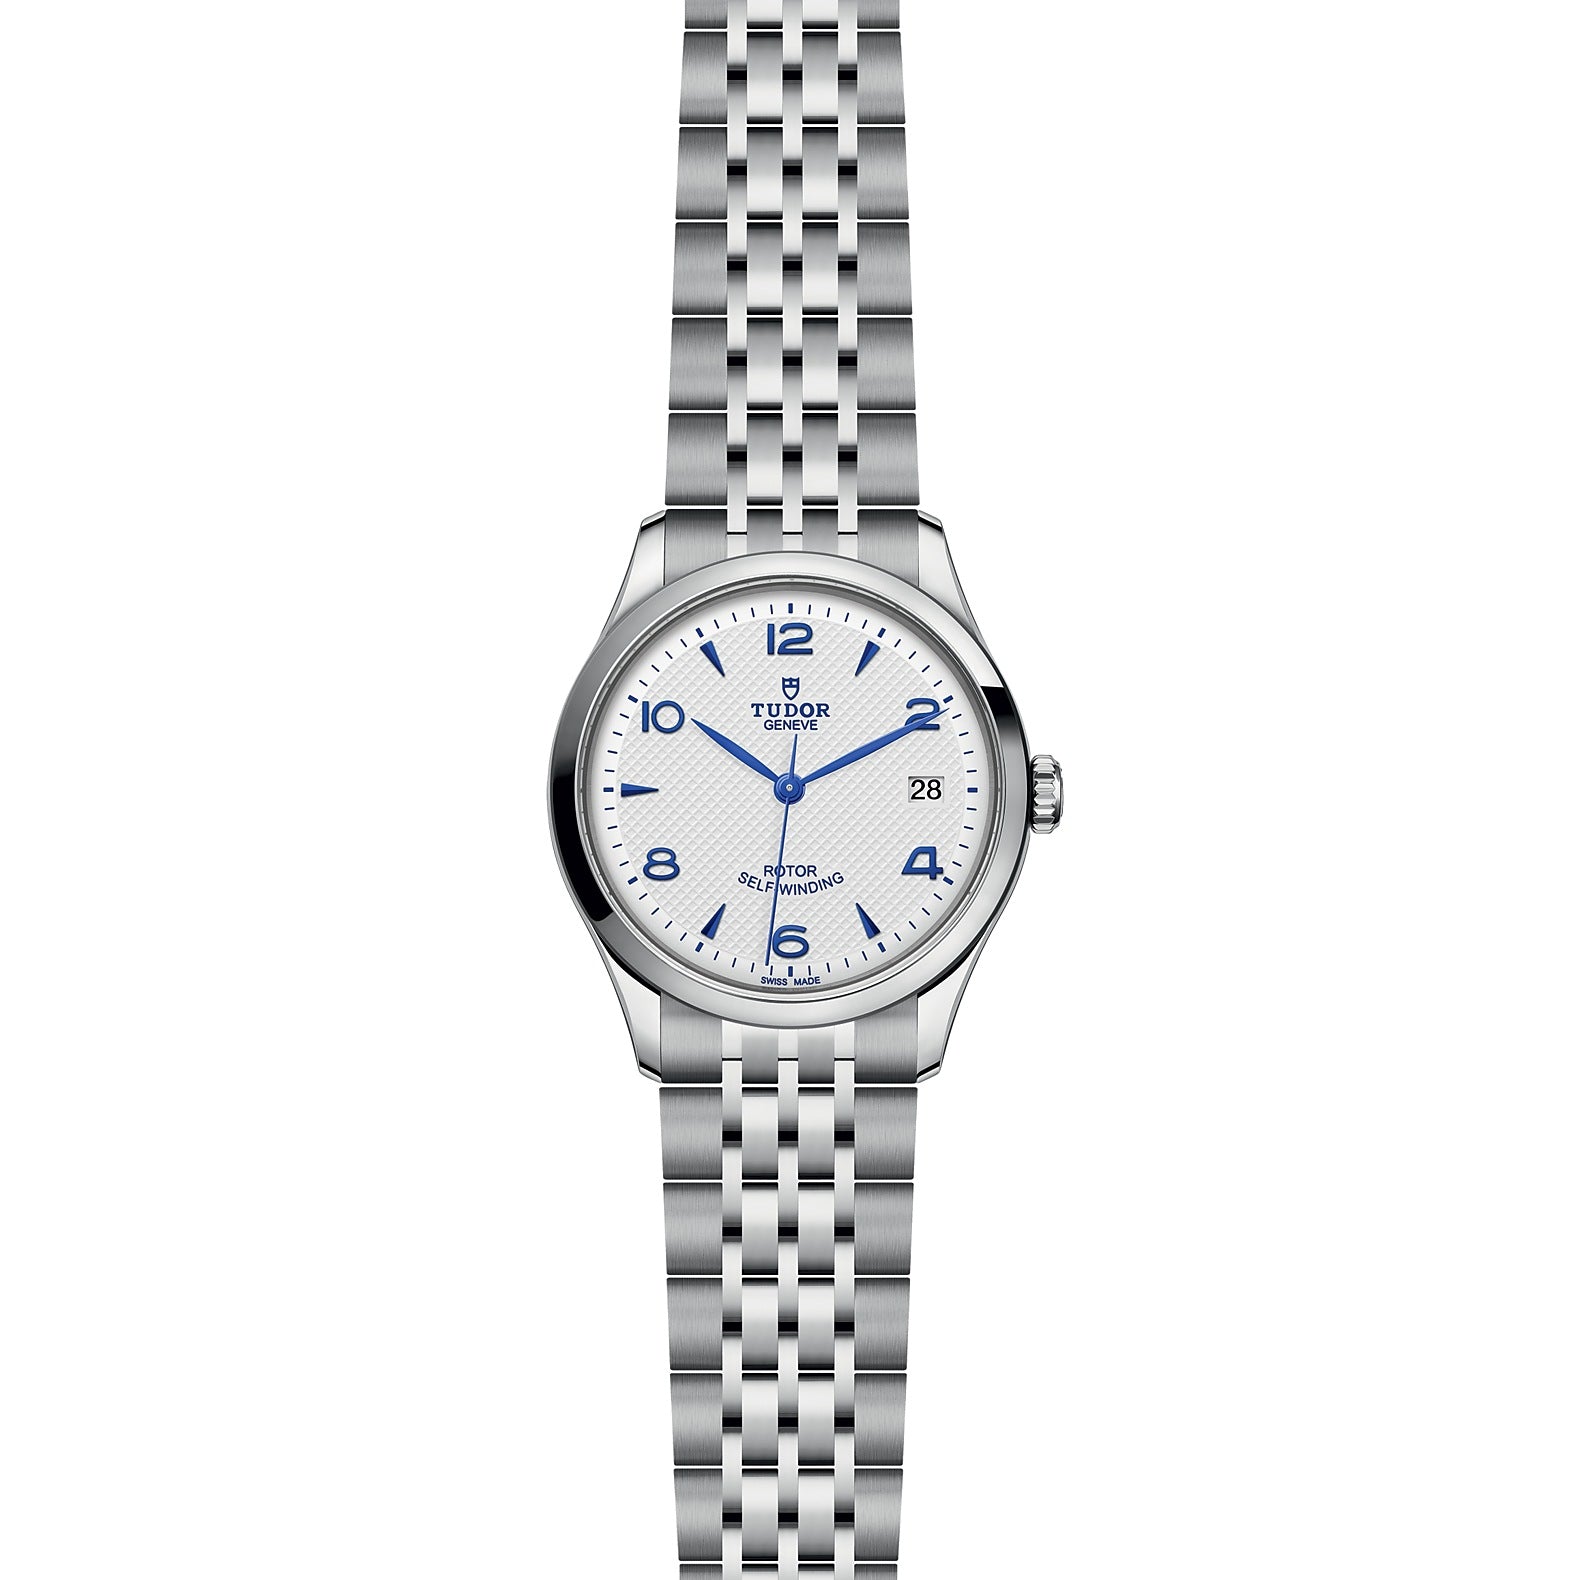 Tudor 1926 Watch, 36mm White Dial, M91450-0005